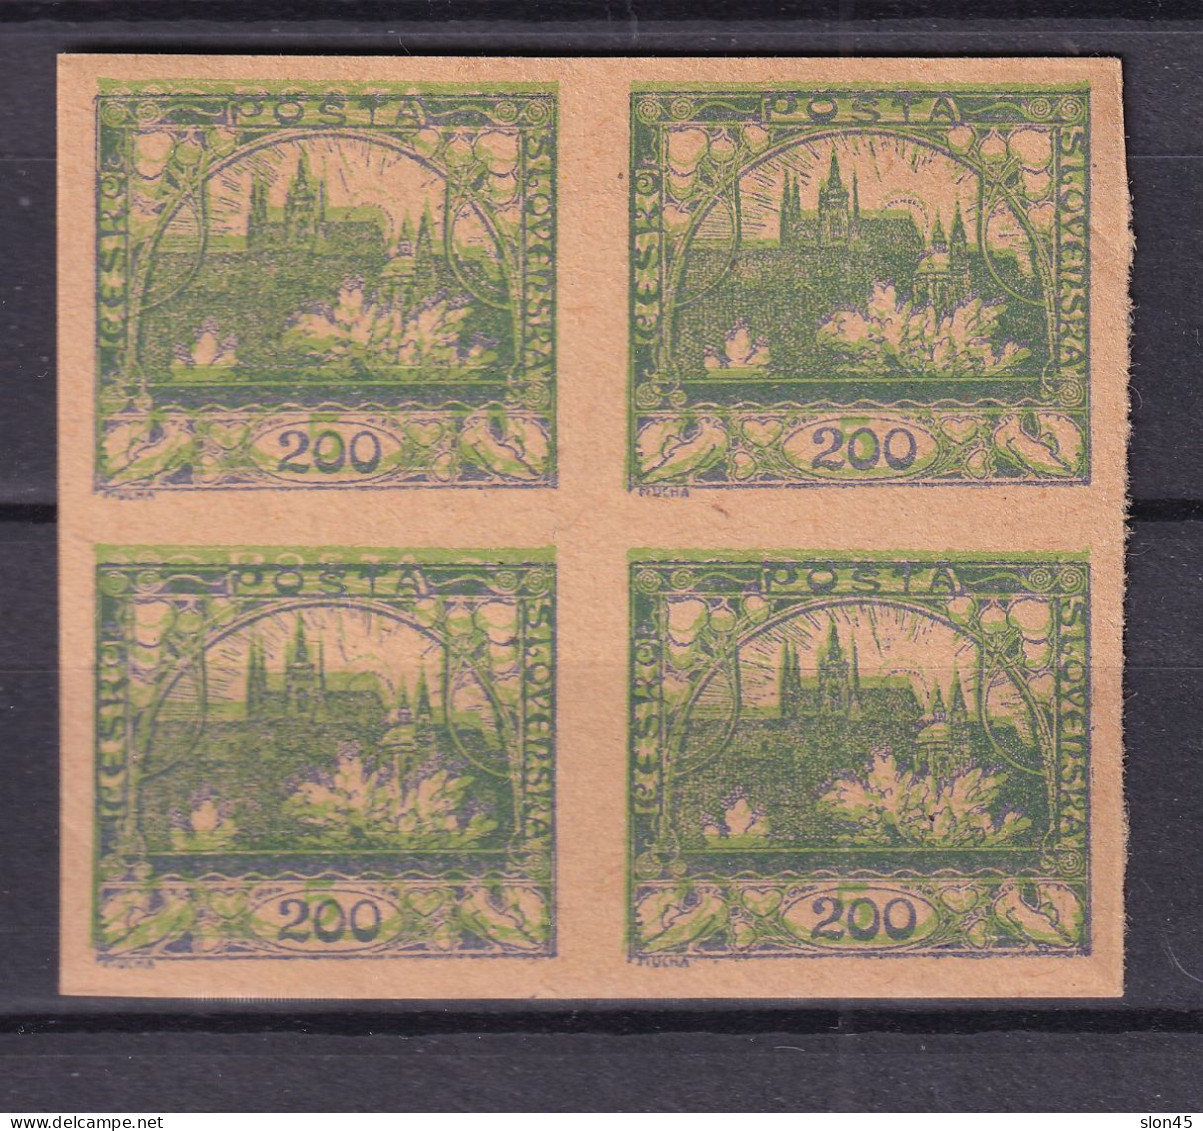 Czechoslovakia 1919 5h Green Imperf Double Print MNG Block Of 4 16080 - Fehldrucke